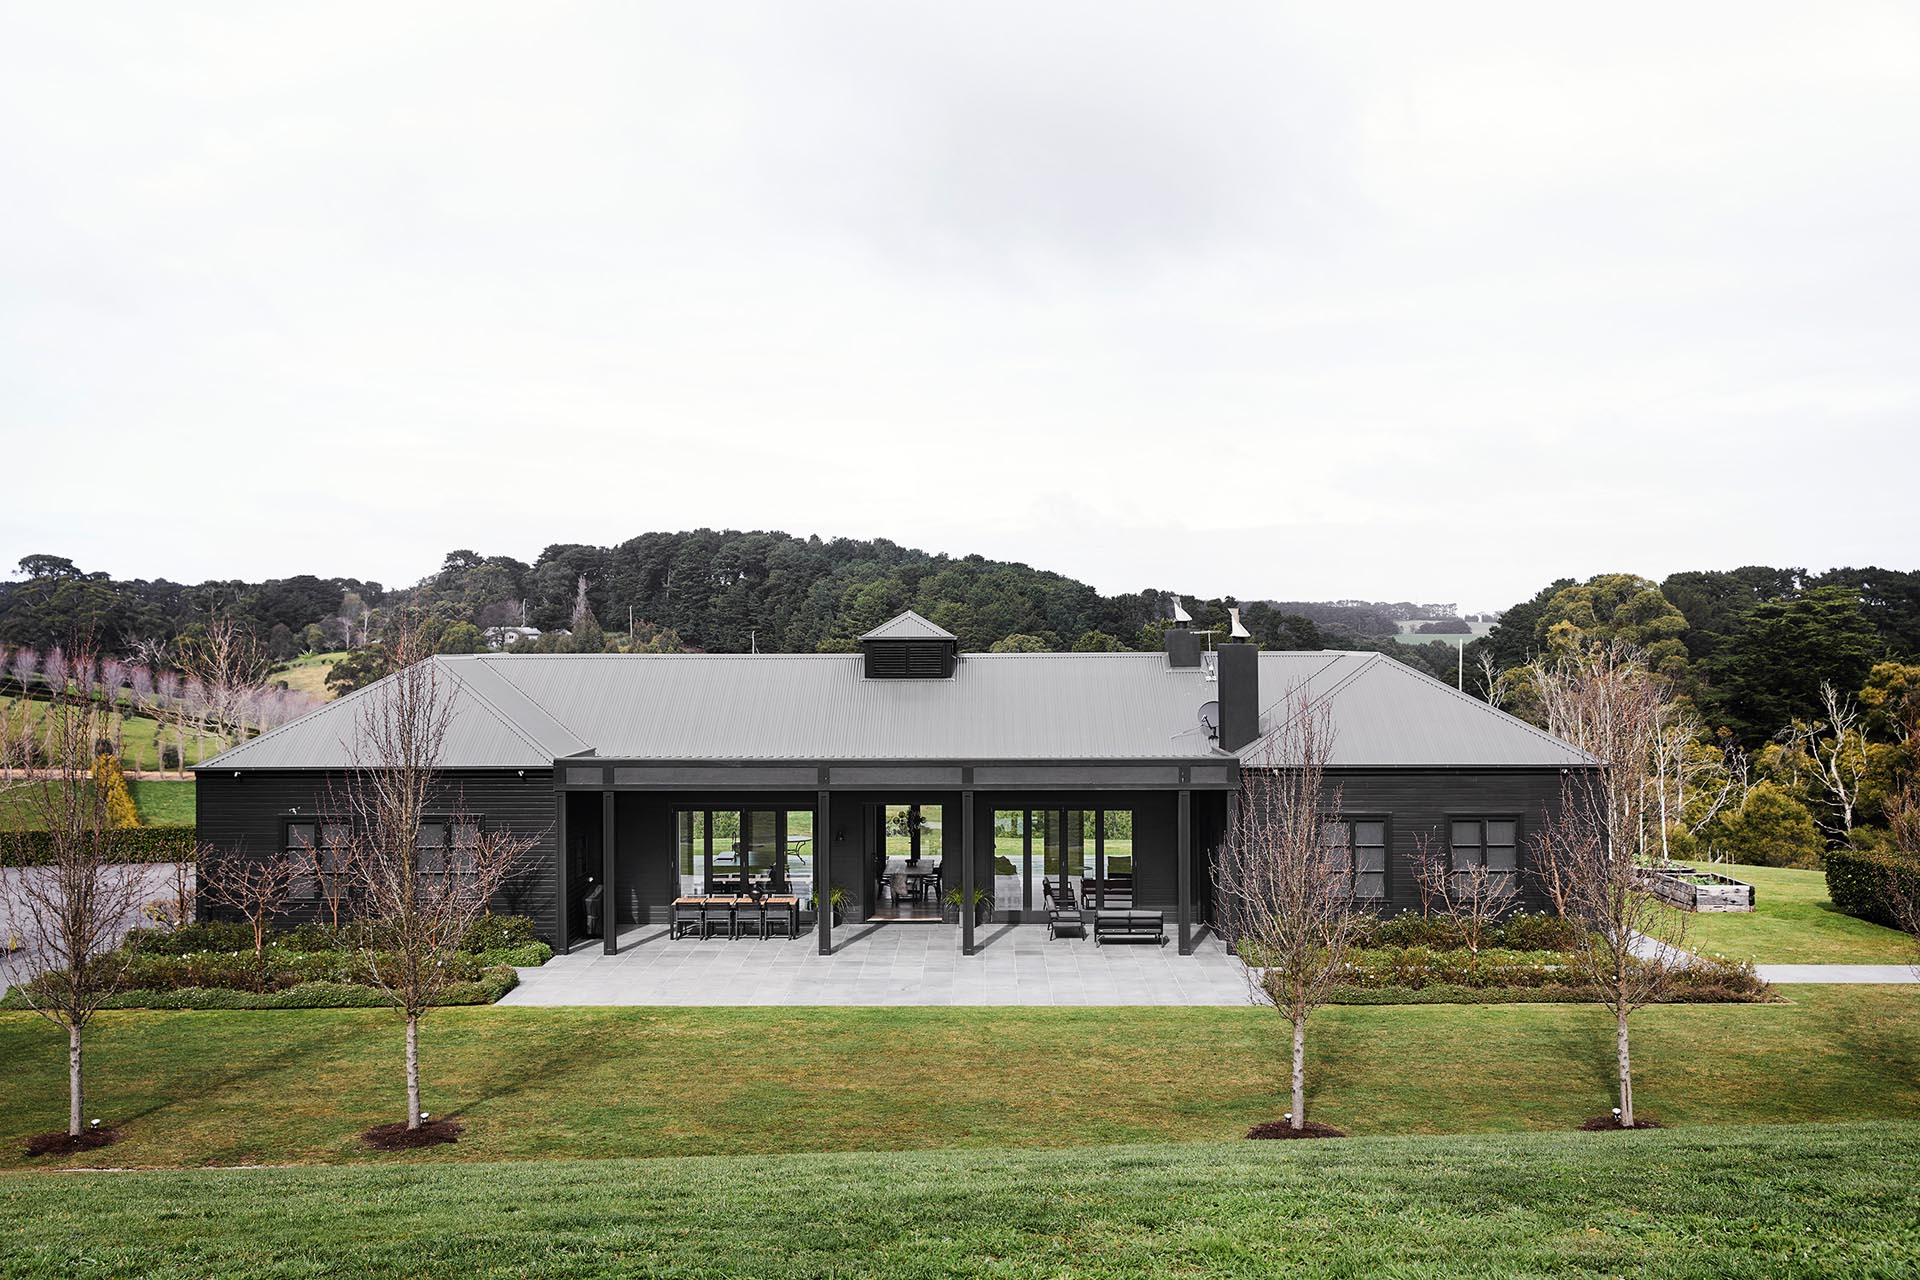 A modern farmhouse inspired home with a dark exterior.